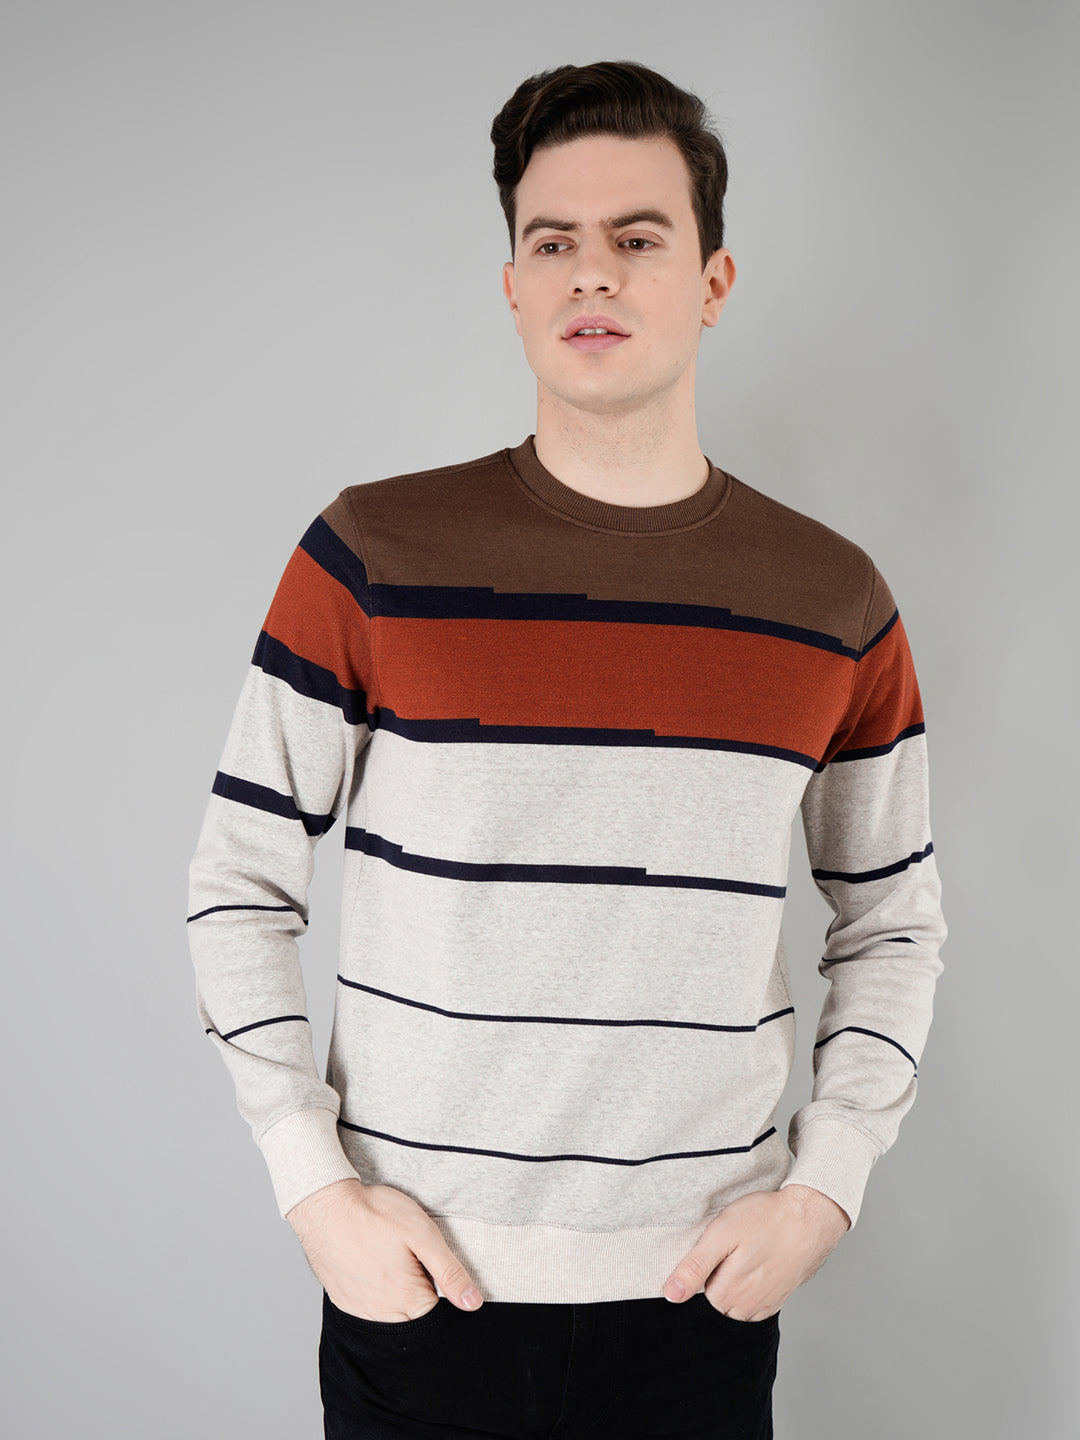 Classic Striped Sweatshirt for Men